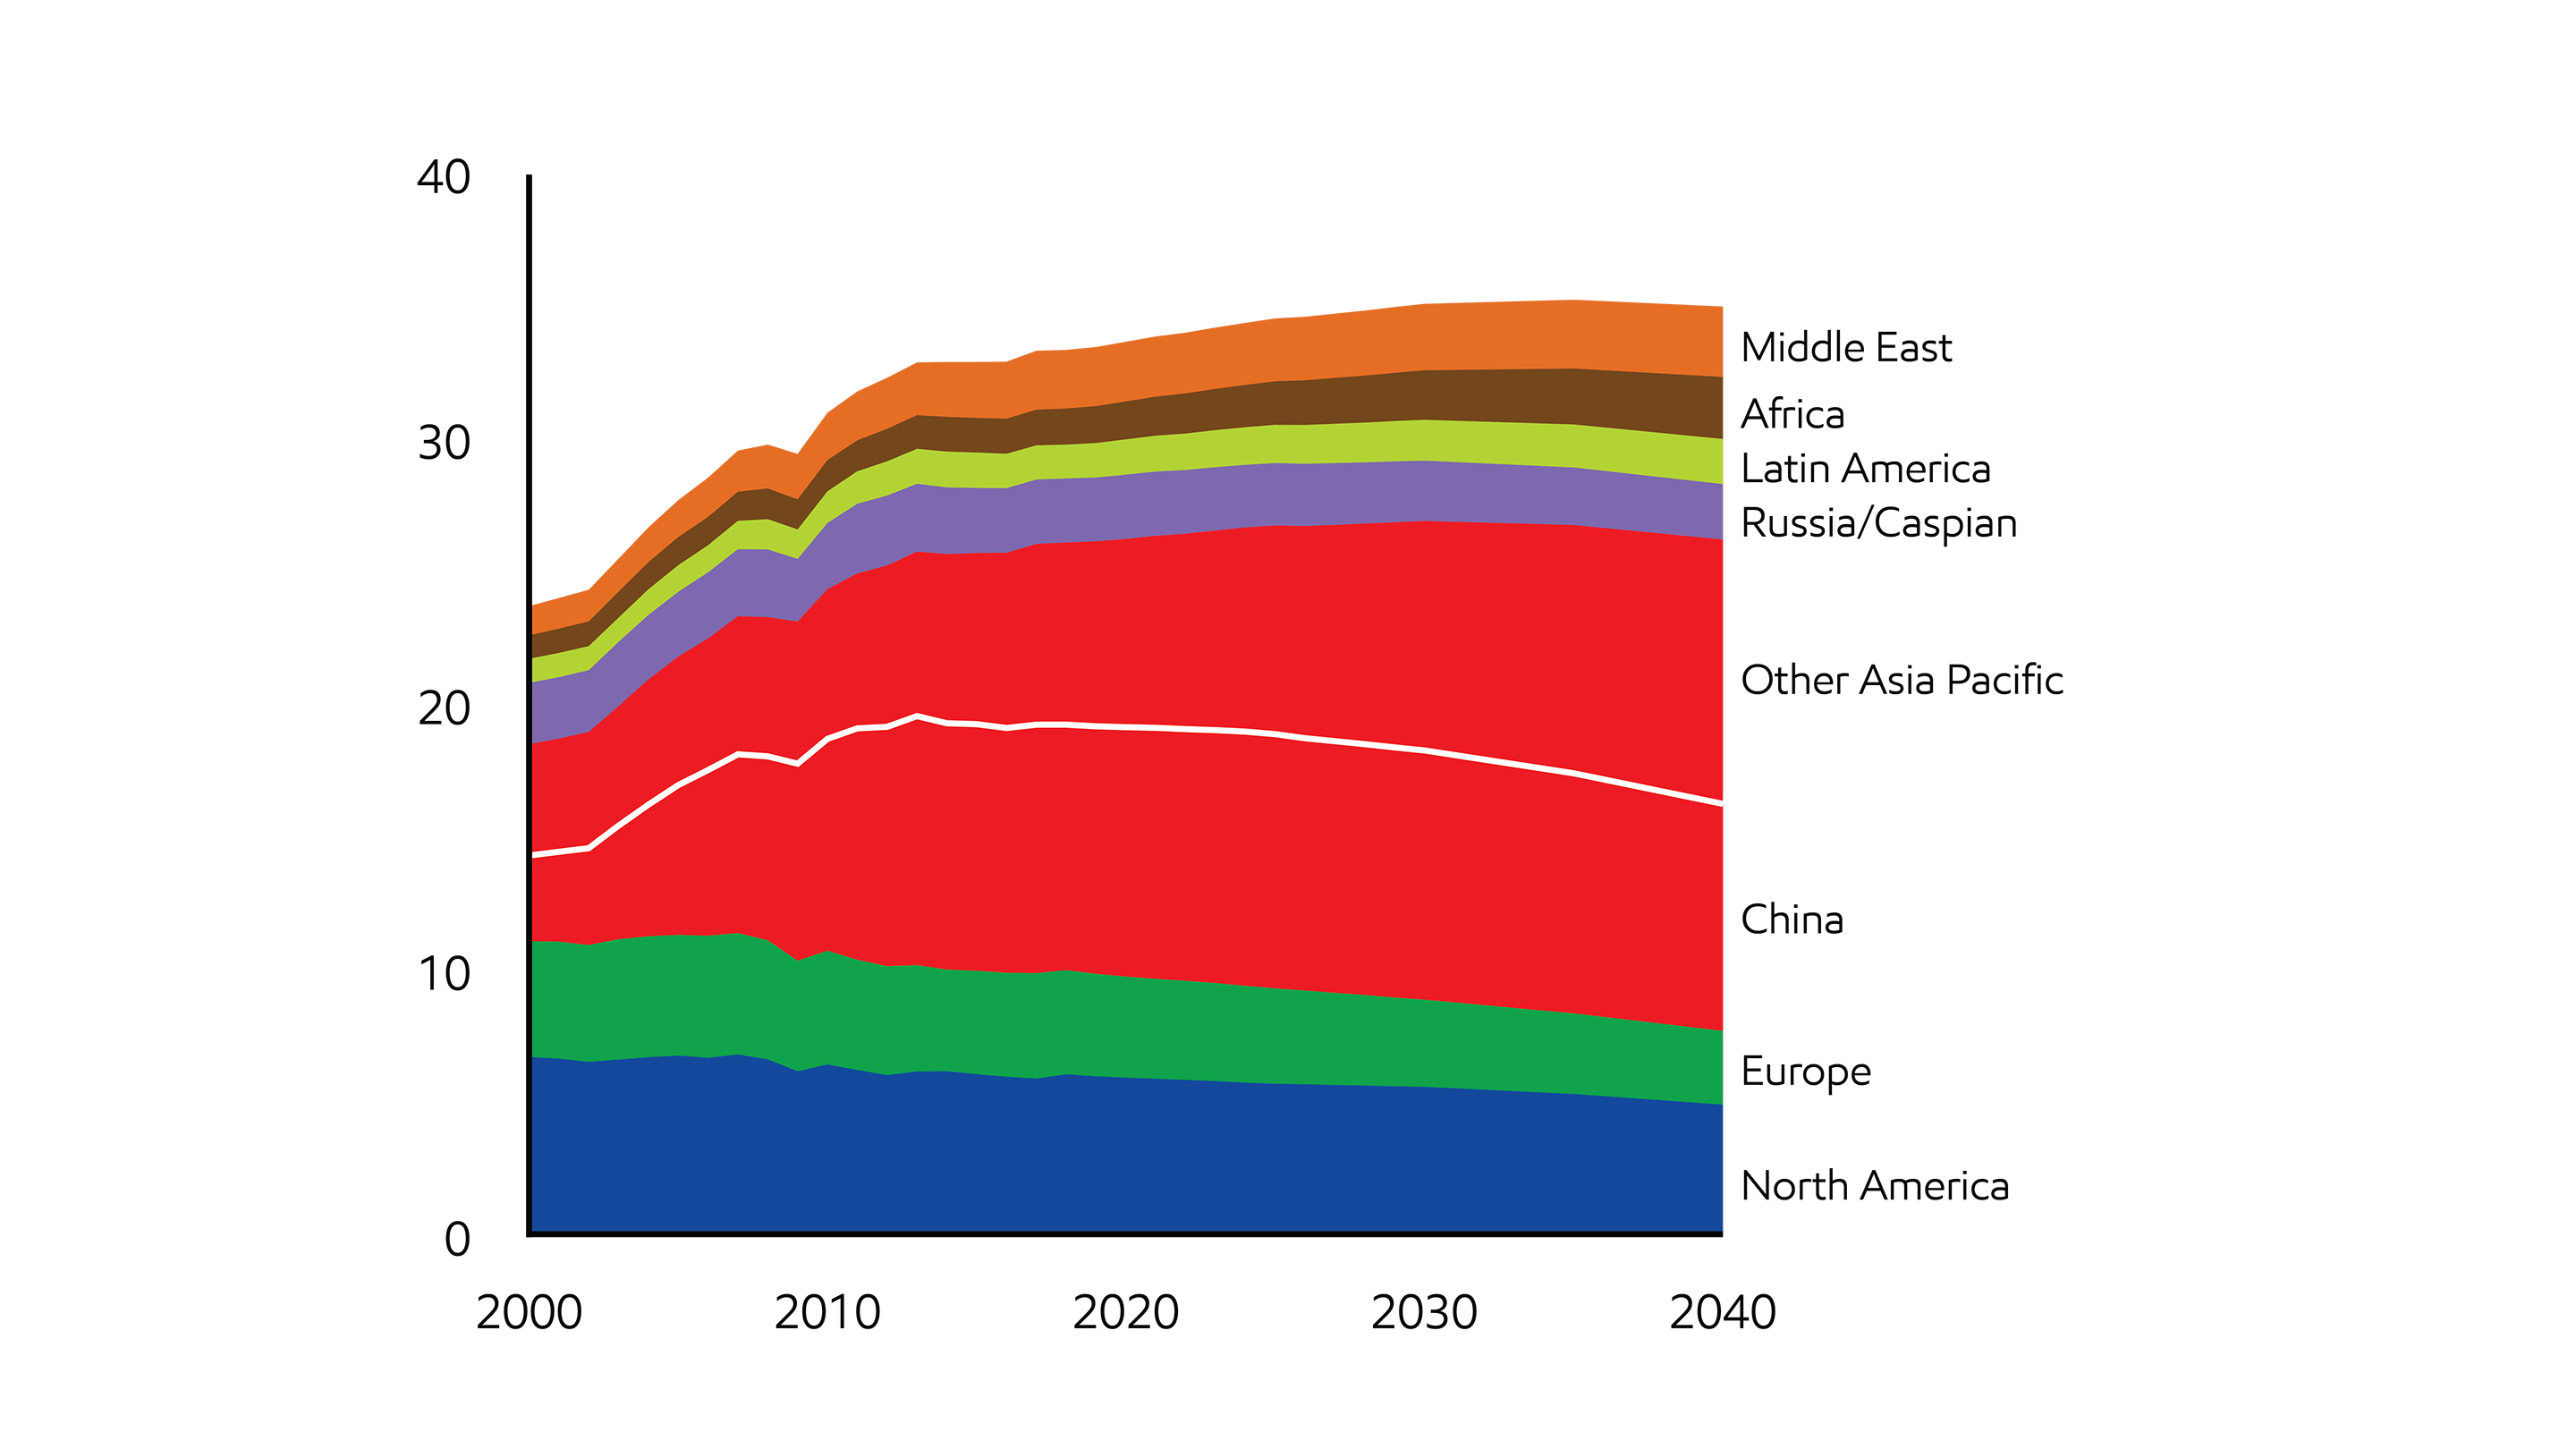 Image Energy-related CO2 emissions peak